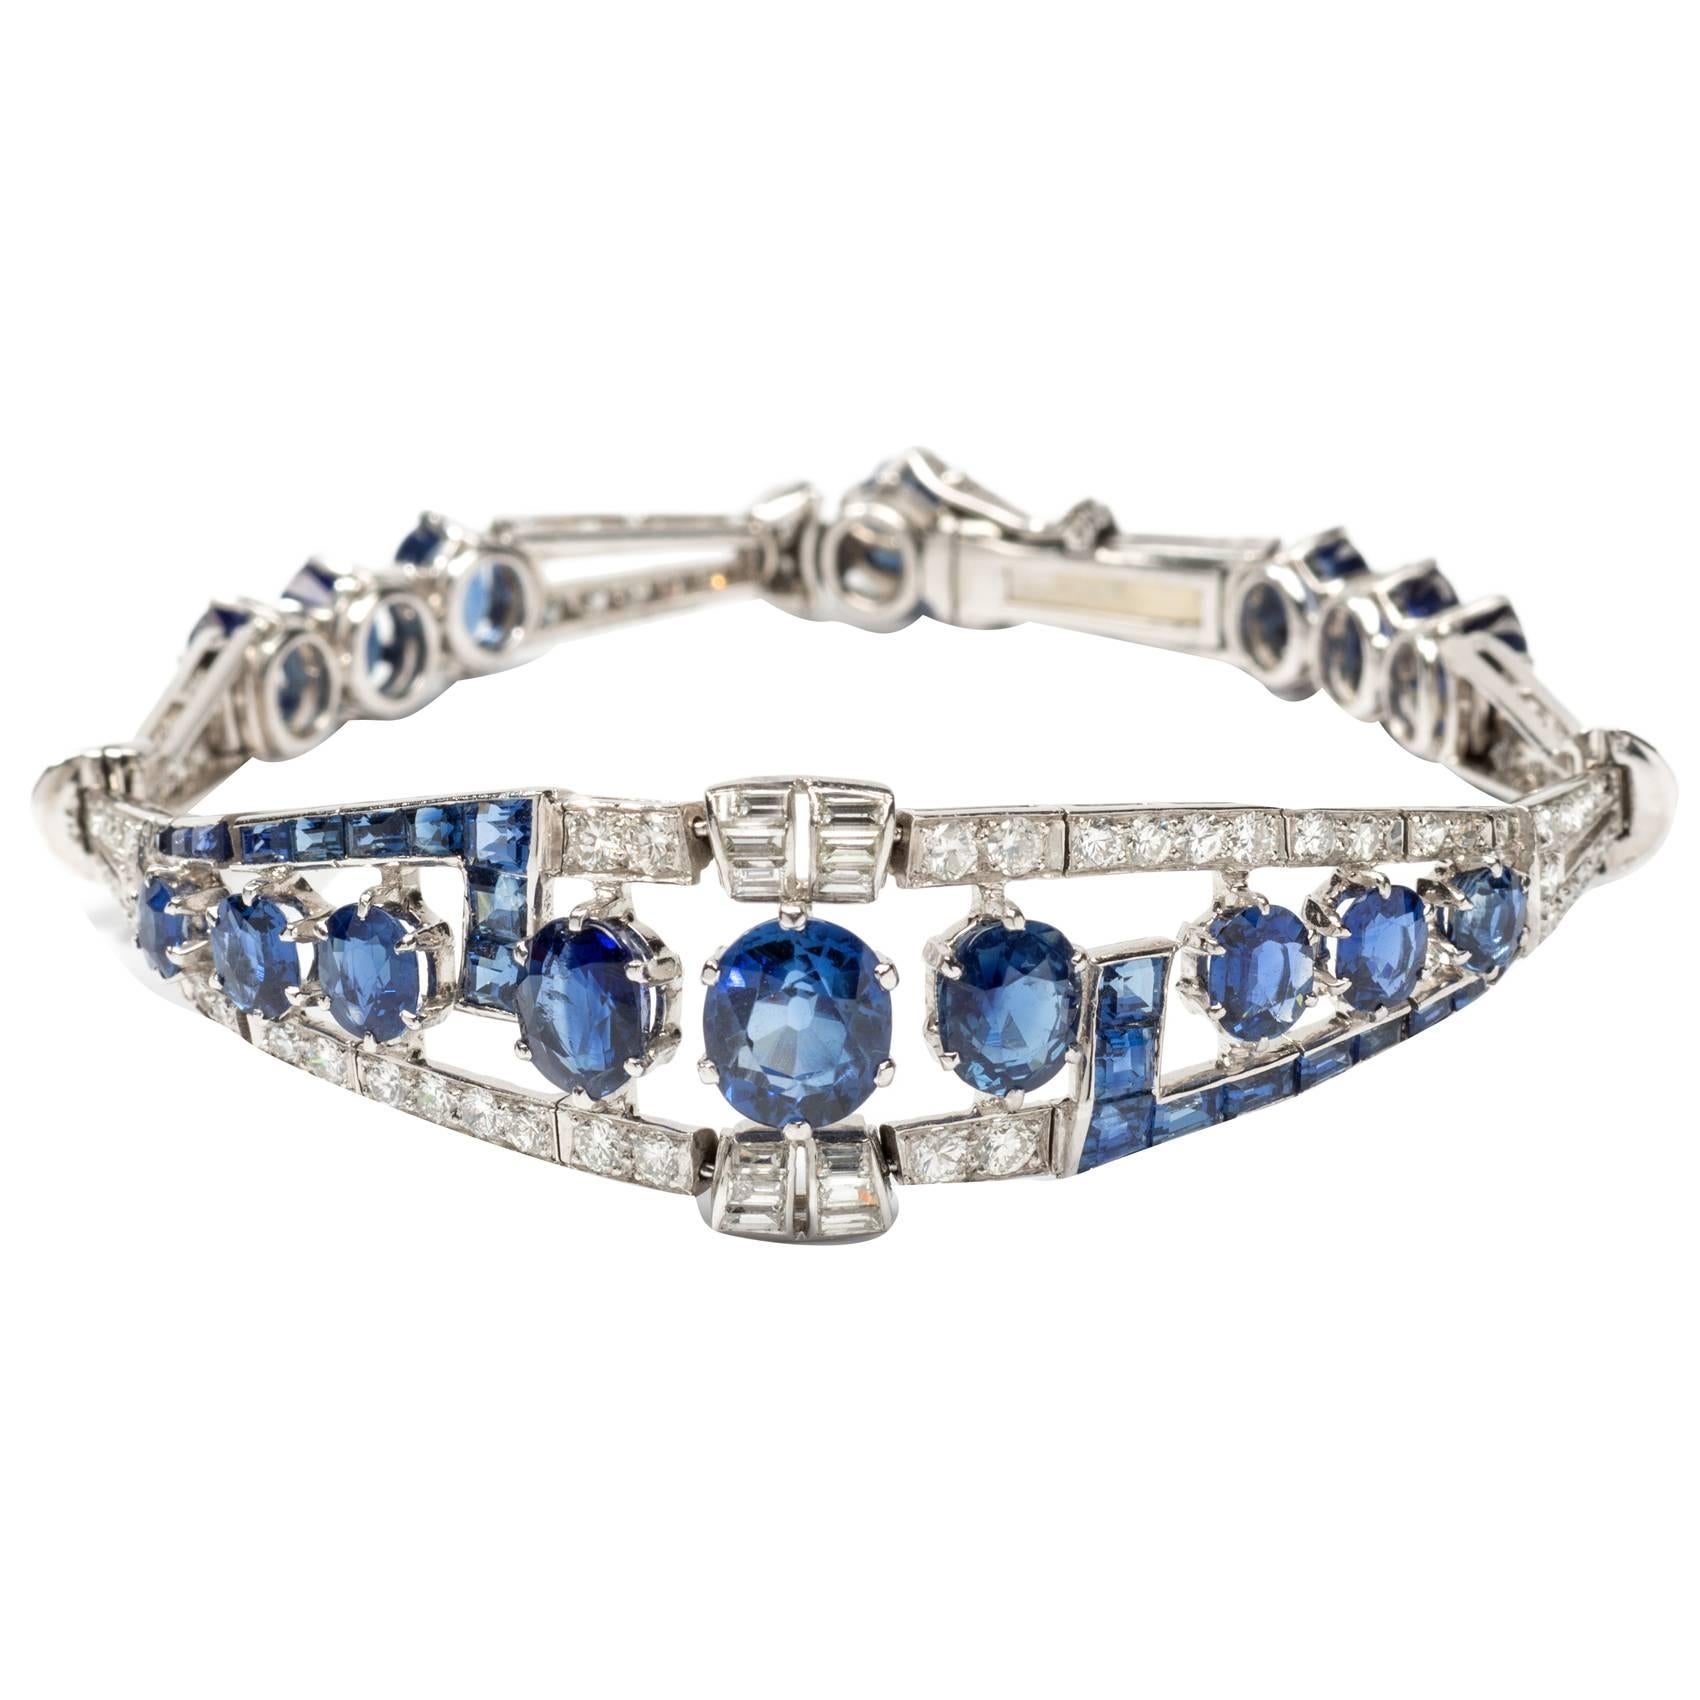 Art Deco Sapphire Diamond Bracelet in Platinum and White Gold